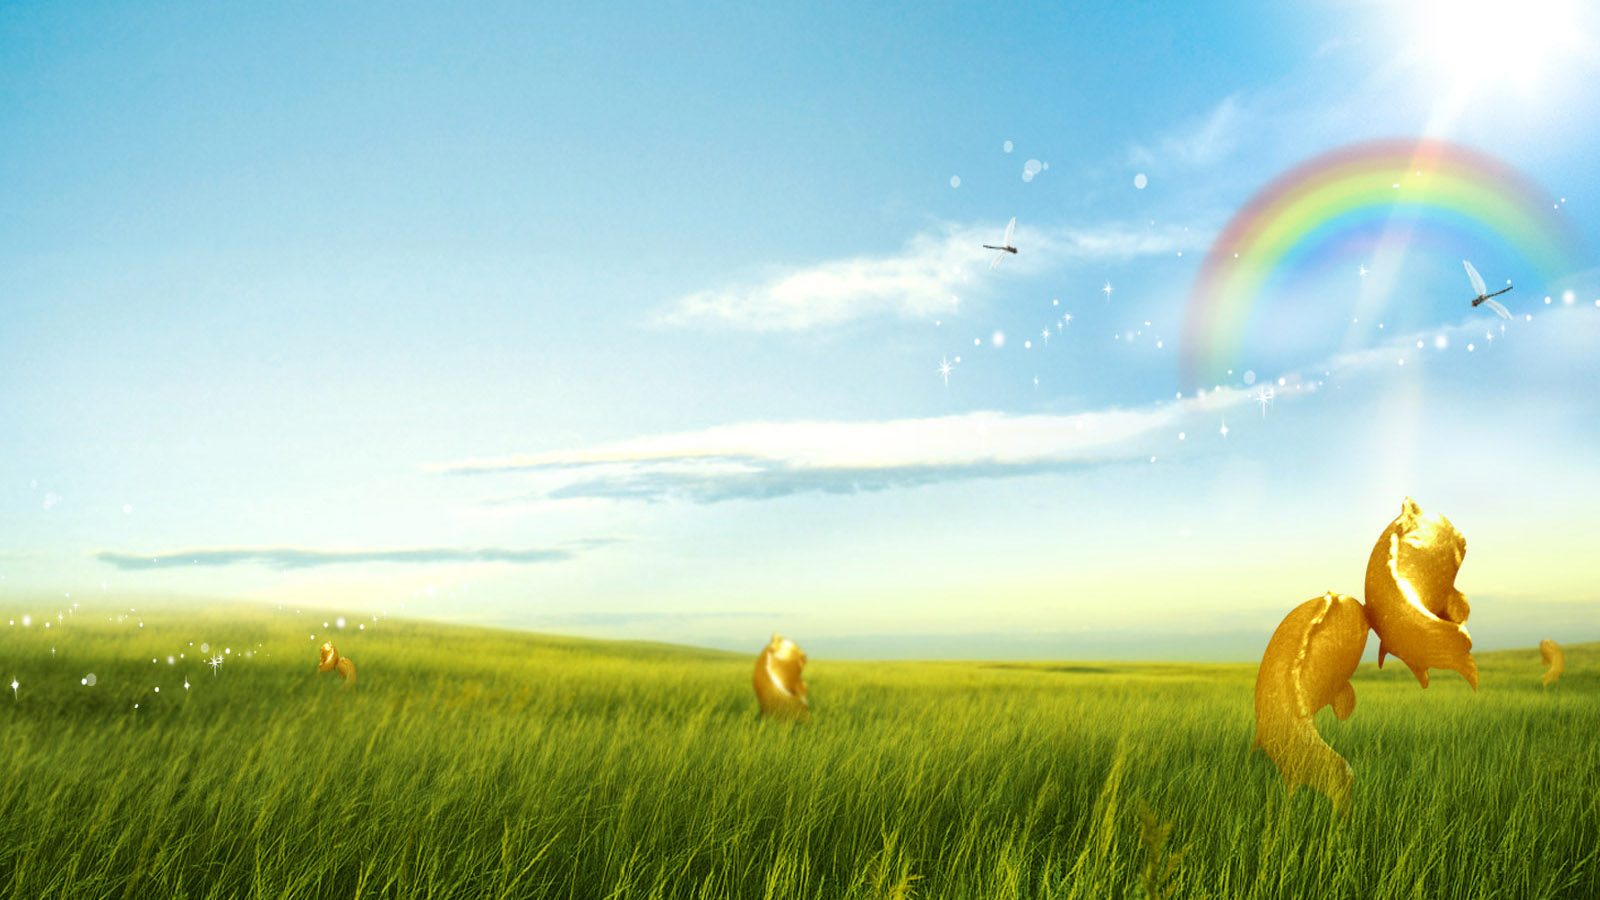 Rainbow scenery desktop wallpaper on the grassland